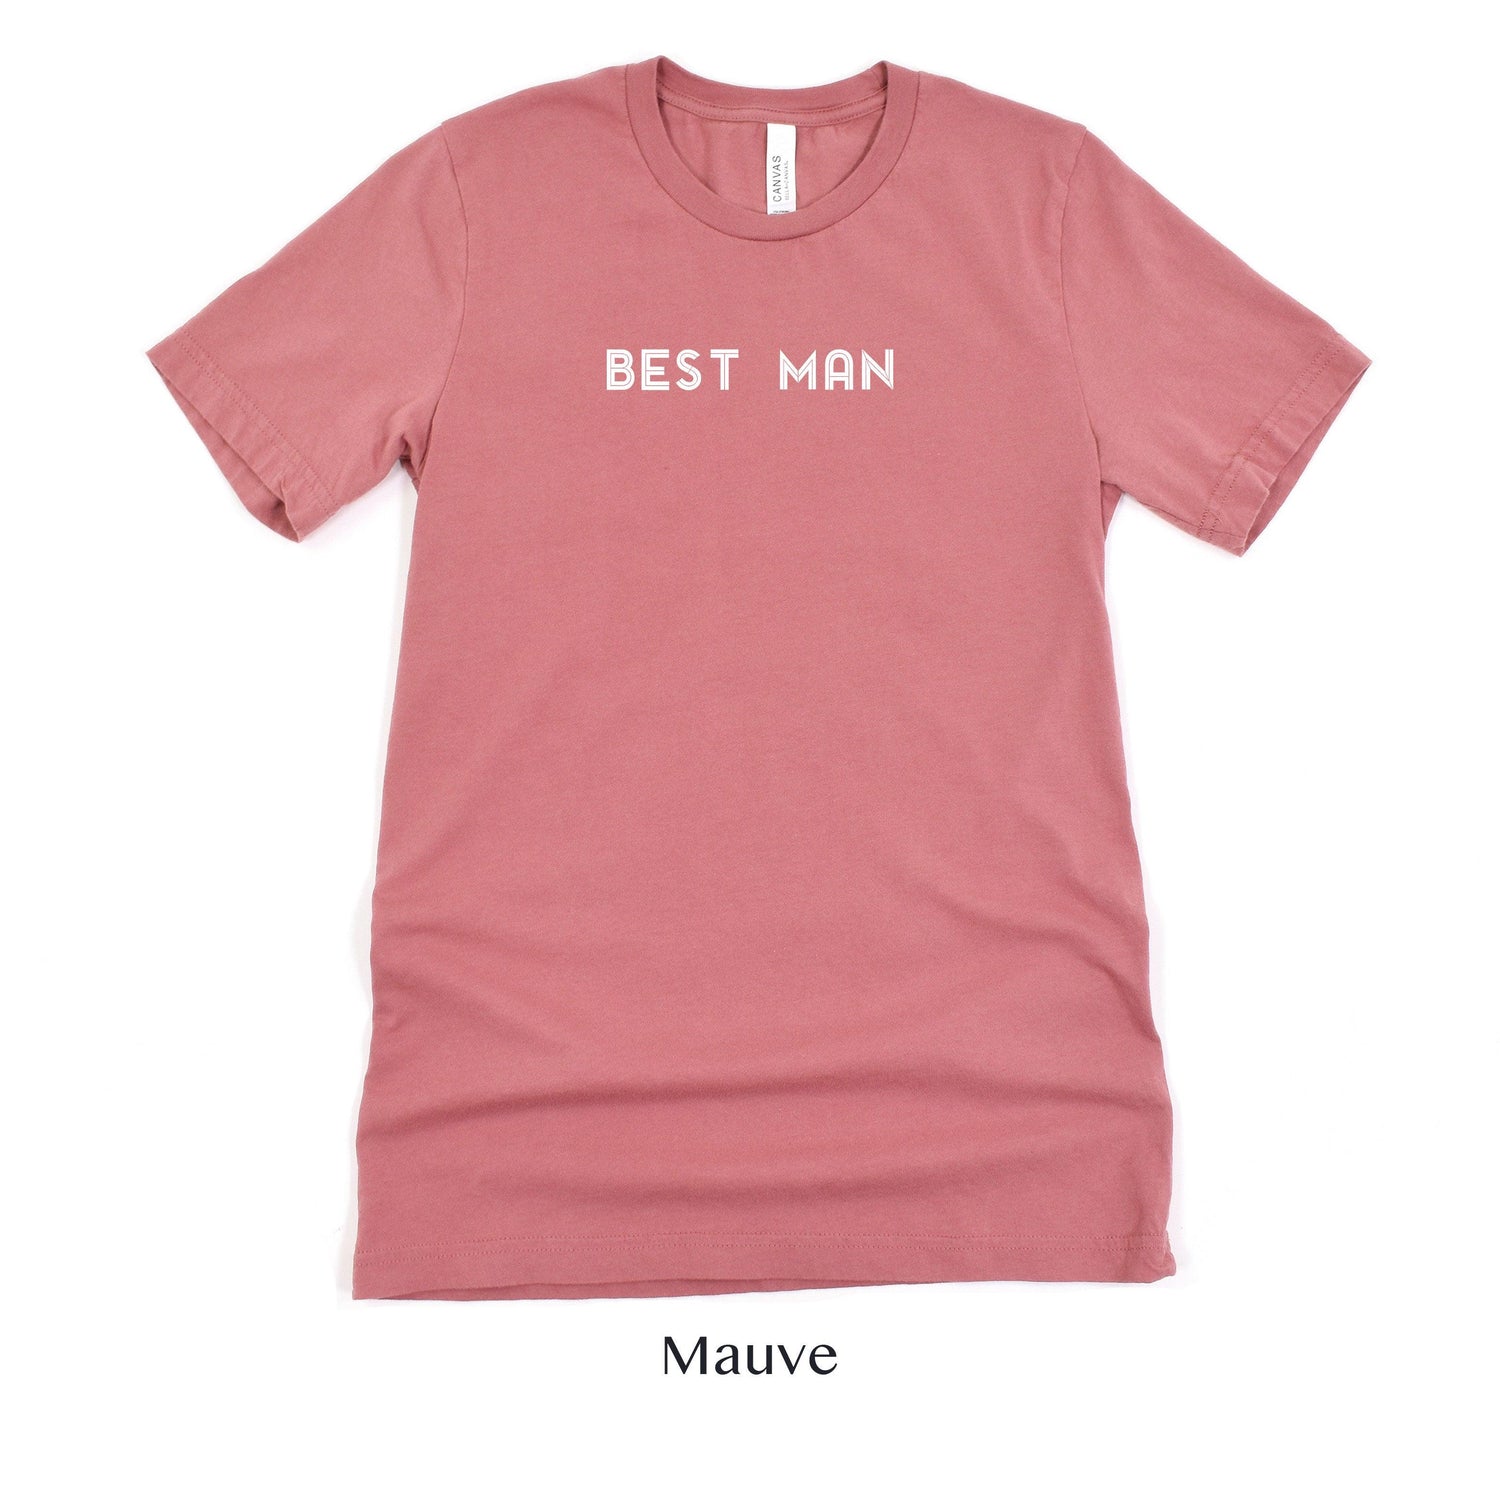 Best Man Shirt - Matching Wedding Party tshirts - Unisex t-shirt by Oaklynn Lane - Mauve Dusty Rose Shirt